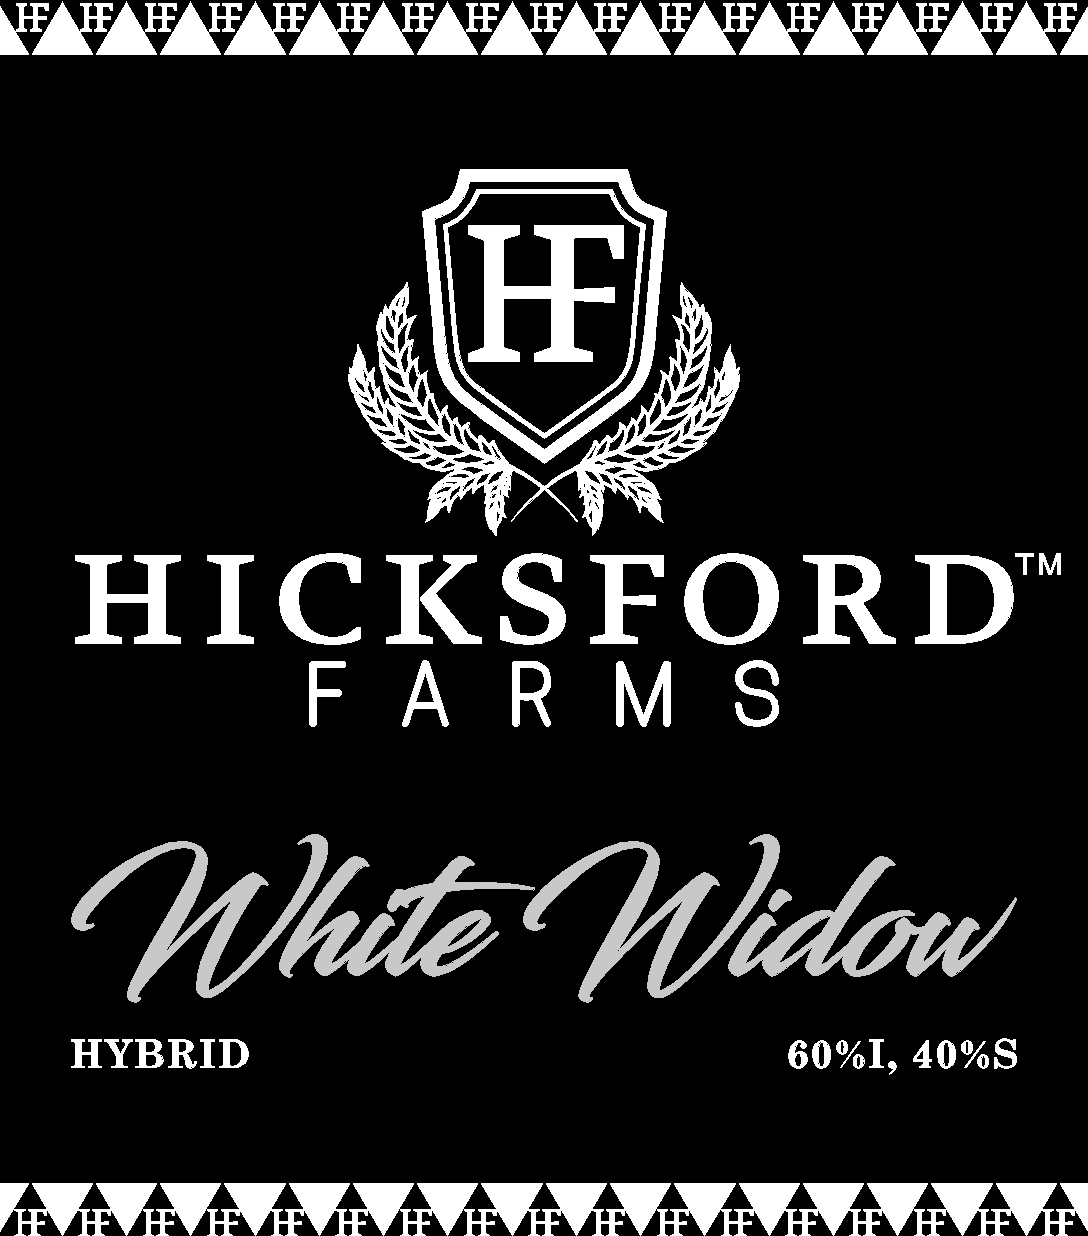 White Widow Hicksford Farms strain information